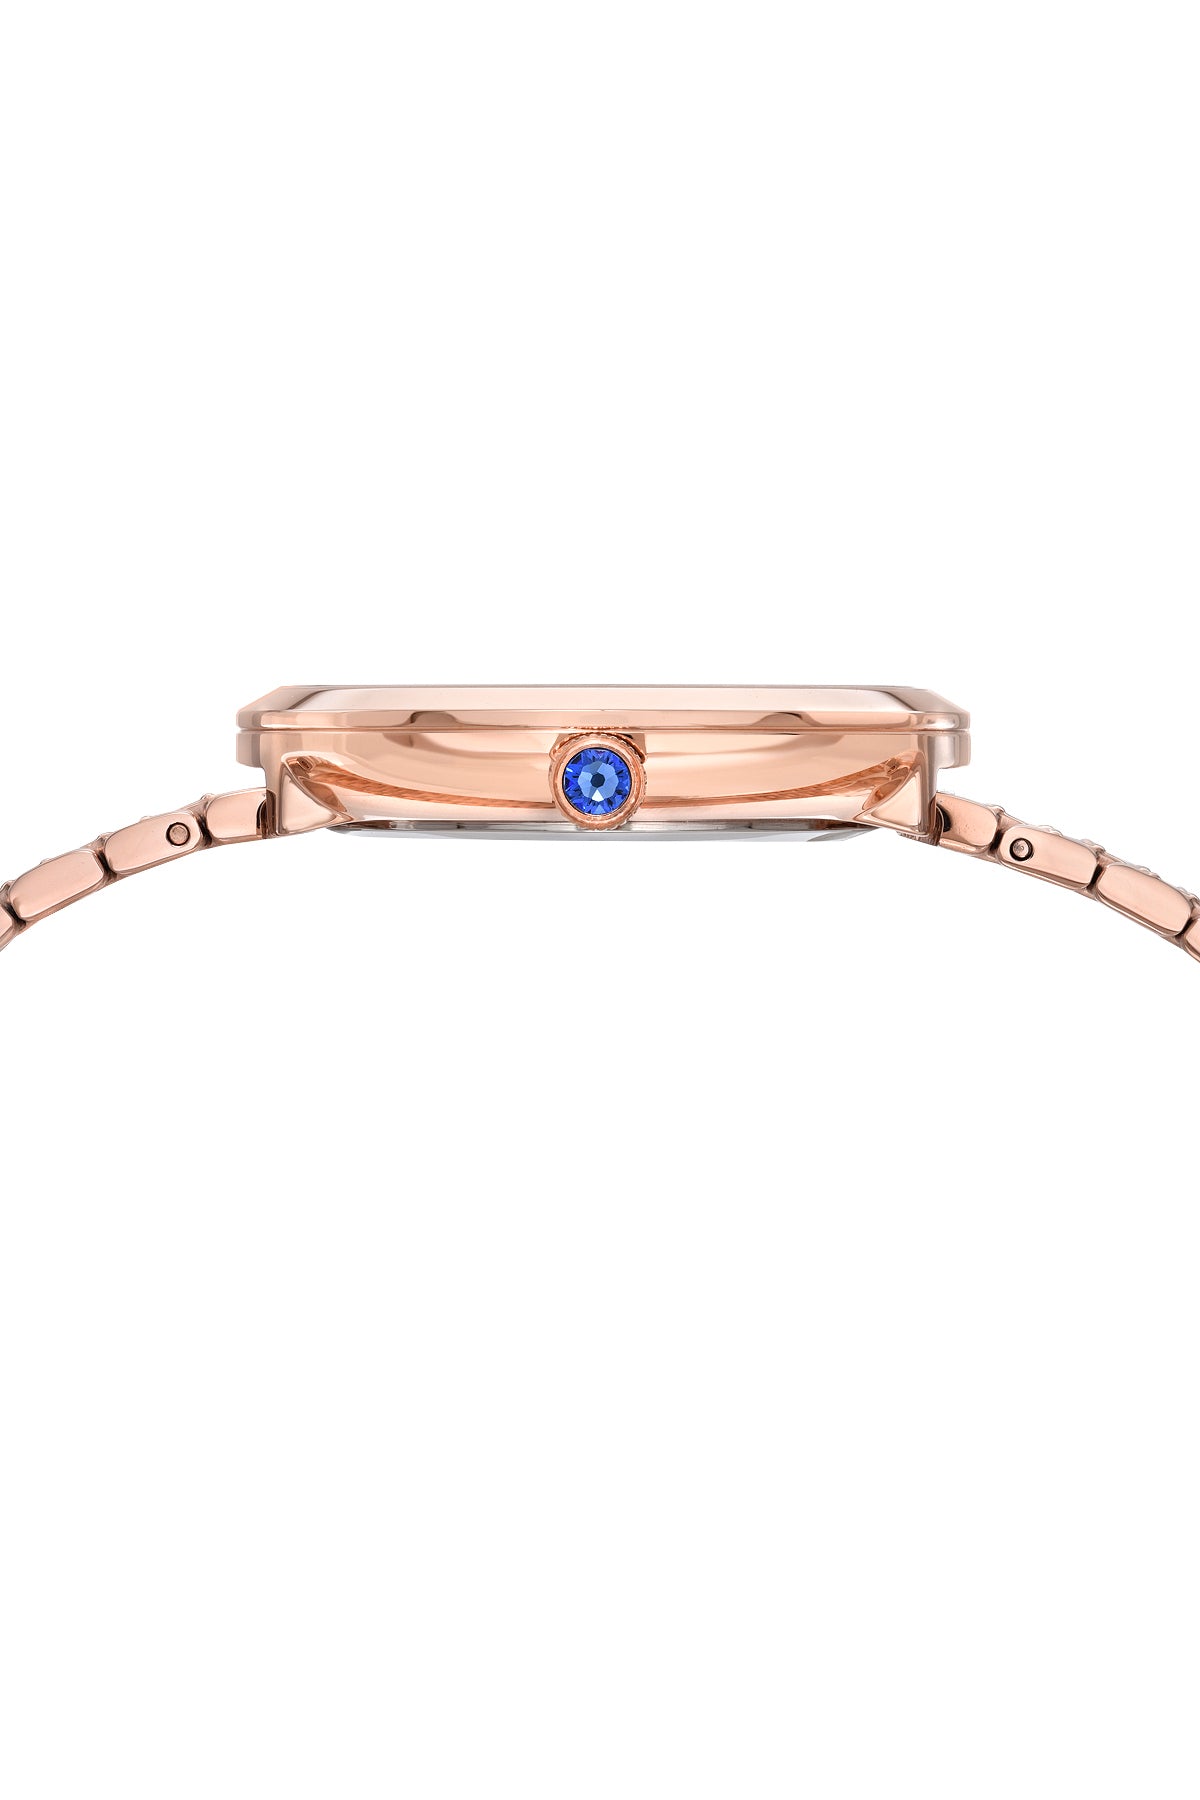 Porsamo Bleu Priscilla Luxury  Women's Stainless Steel Watch, Rose, Blue 932CPRS